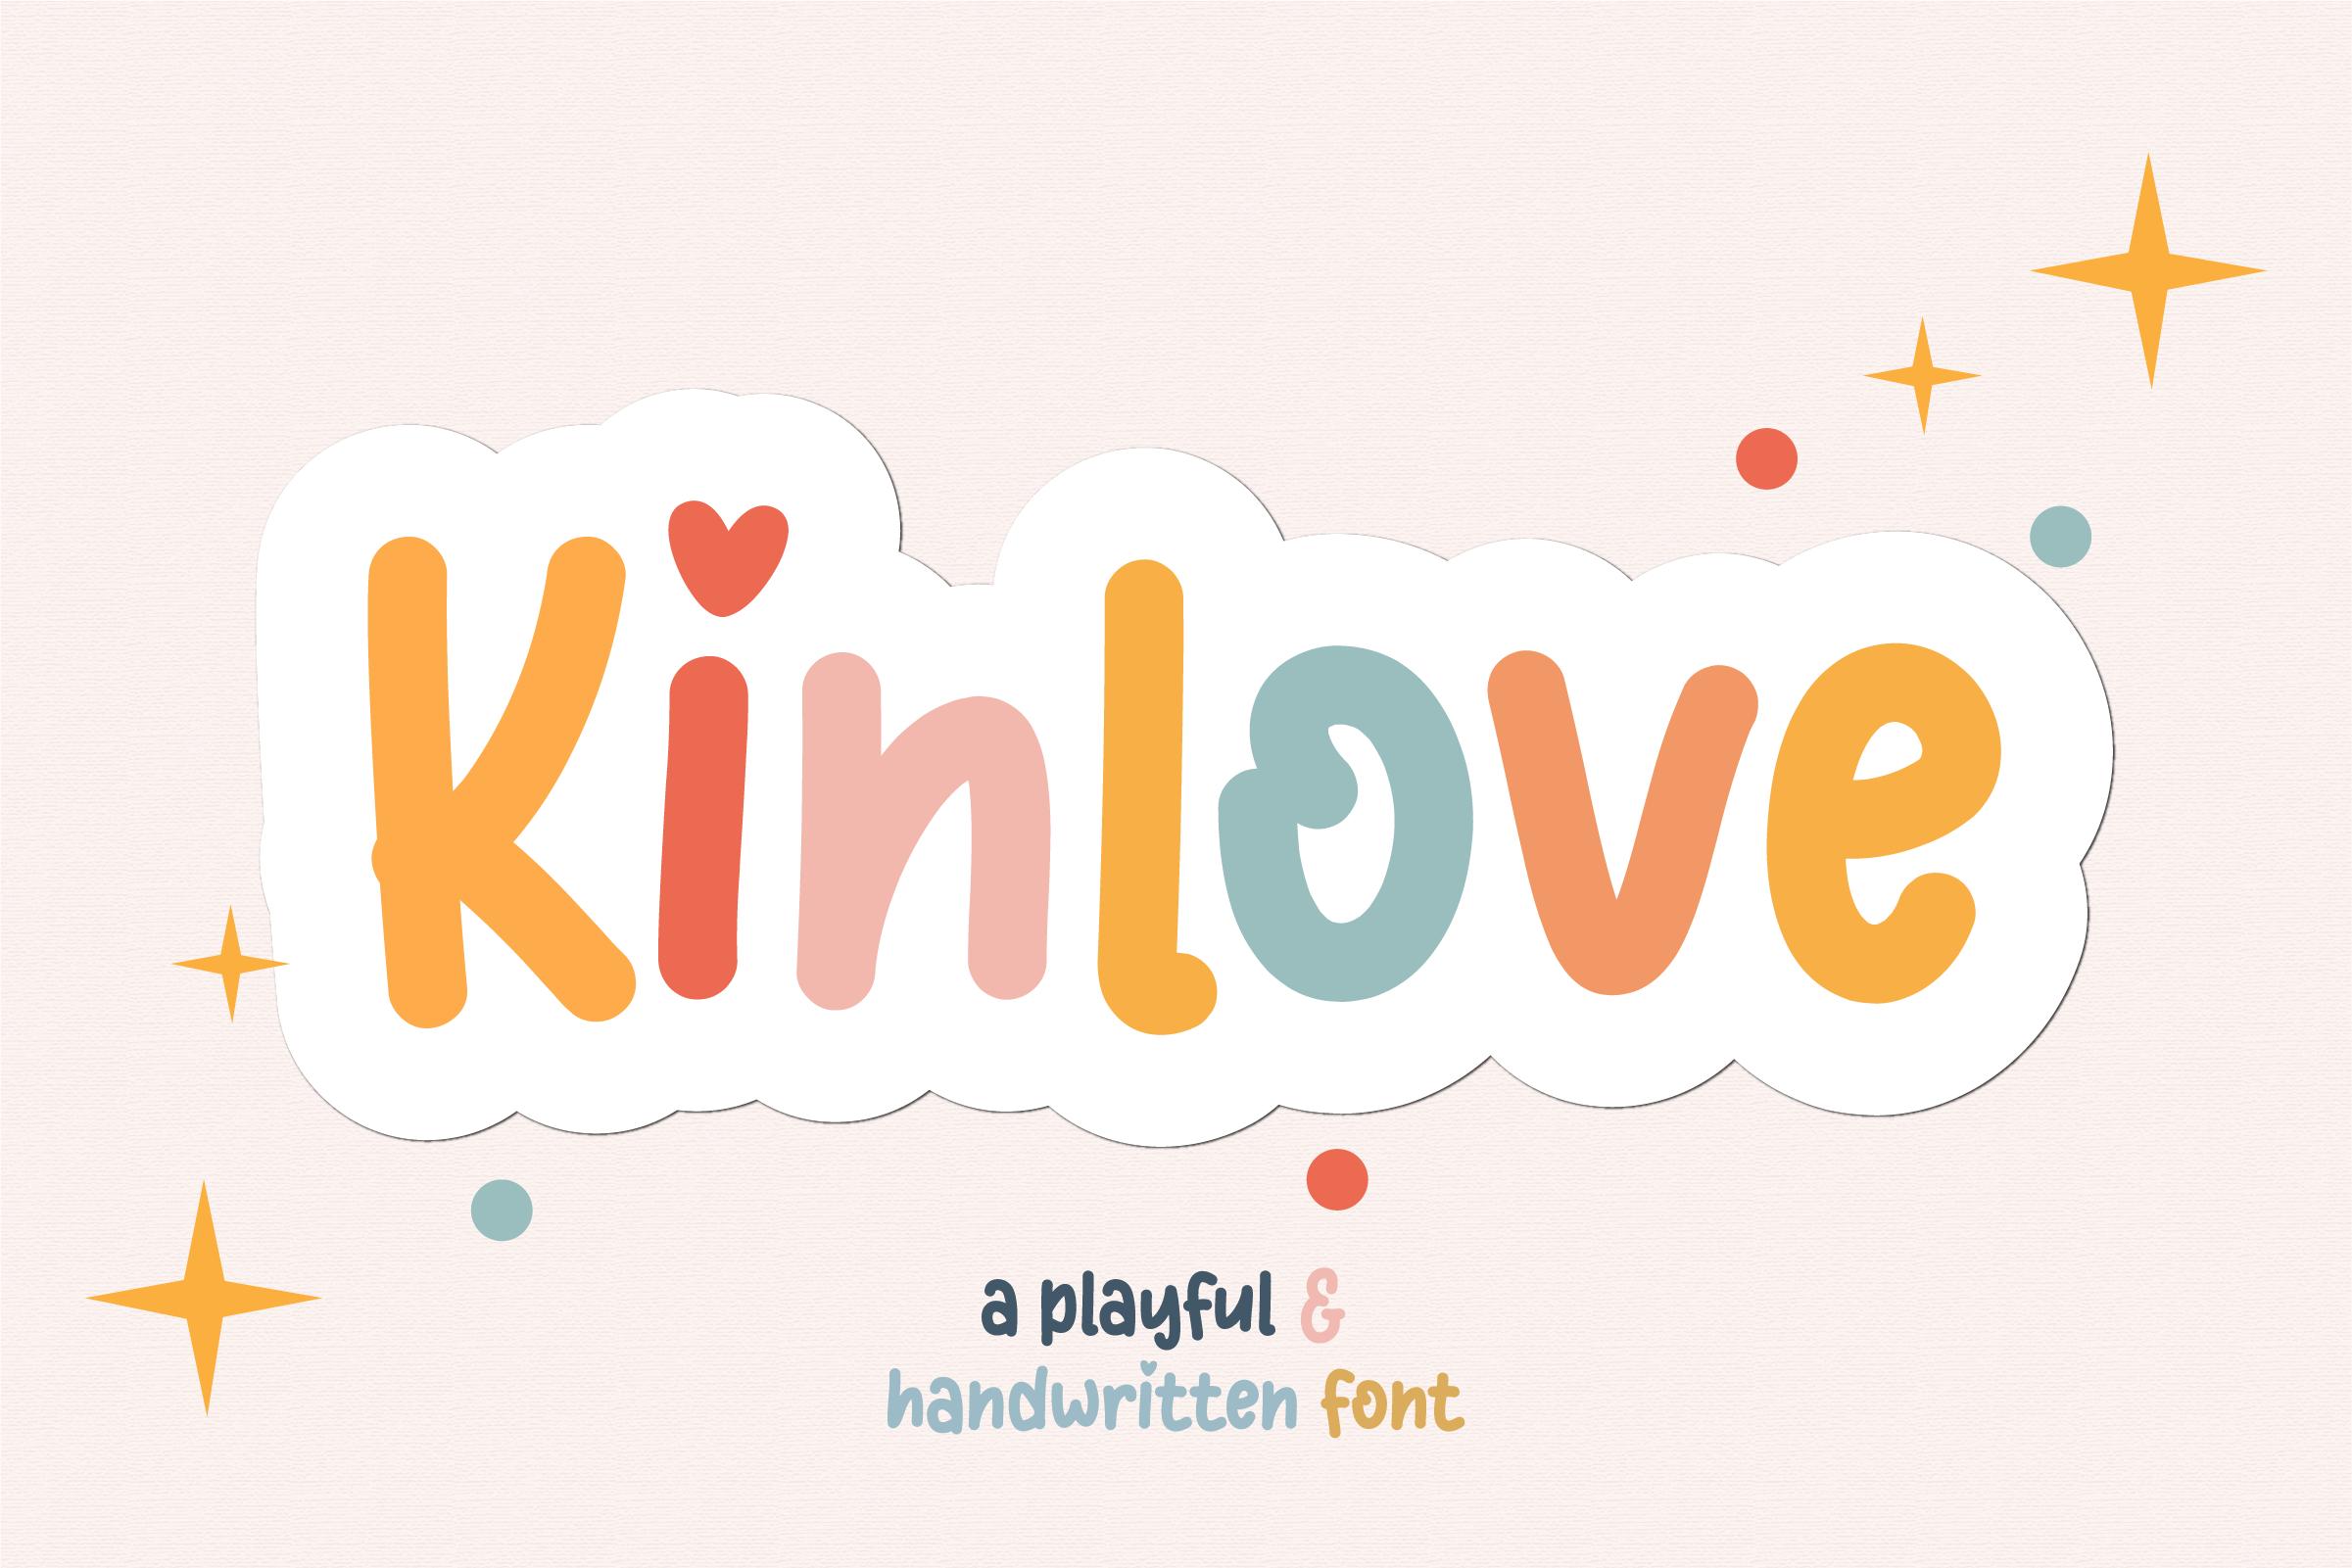 Kinlove Font